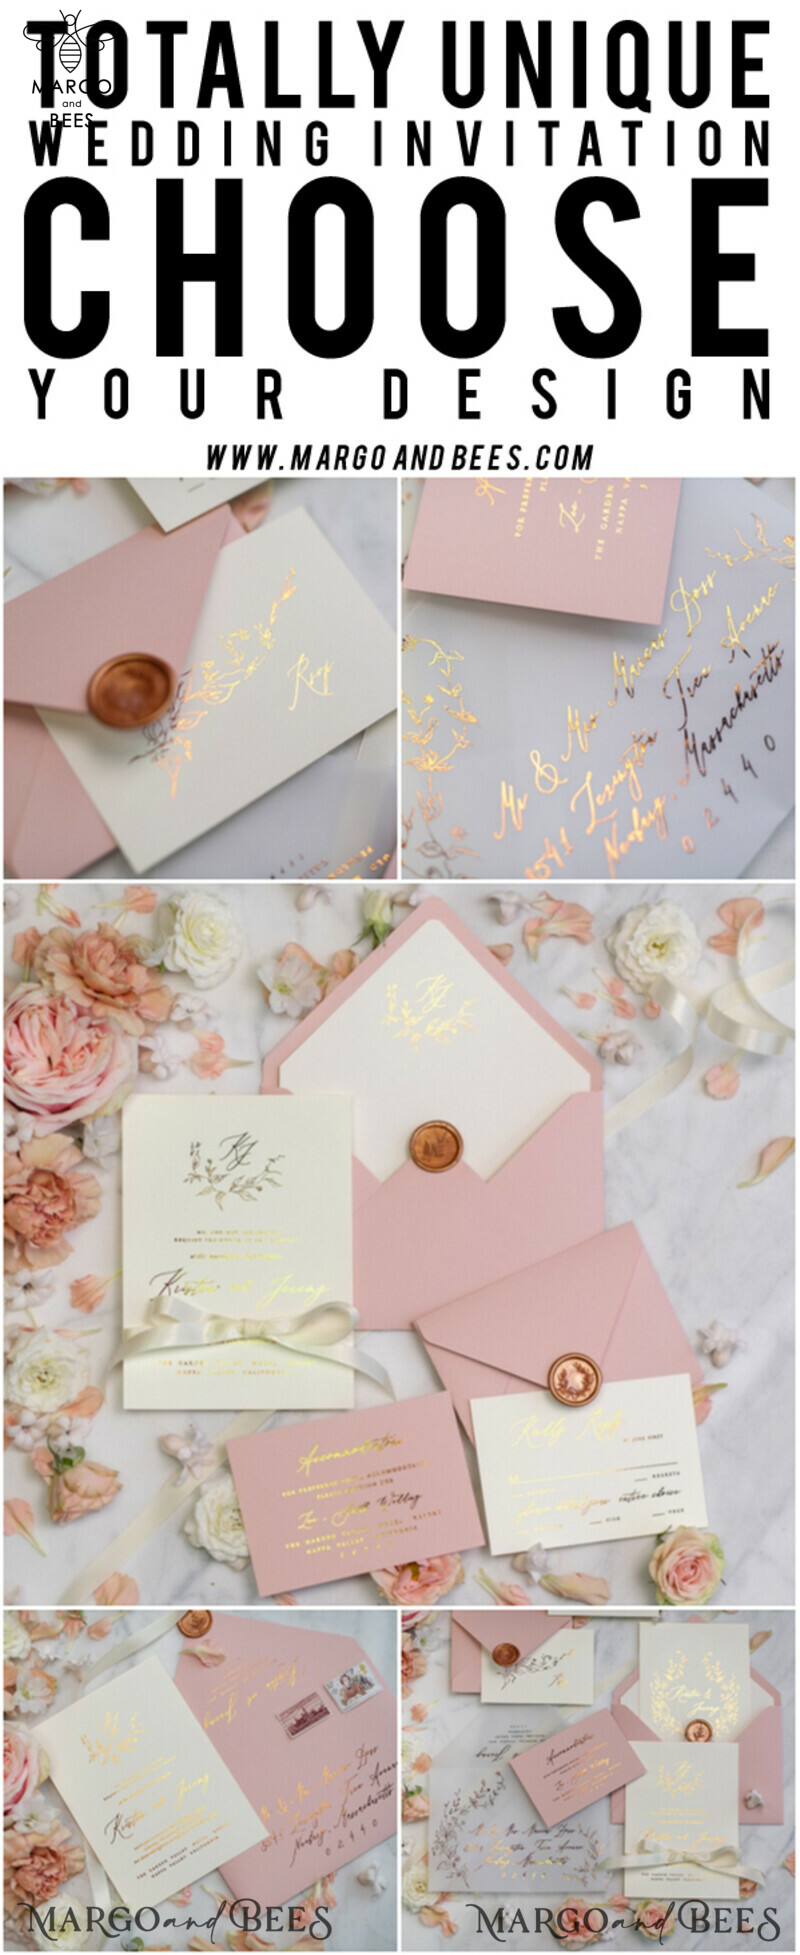 Bespoke Vellum Wedding Invitation Suite: Romantic Blush Pink and Glamour Gold Foil for an Elegant Golden Wedding-40